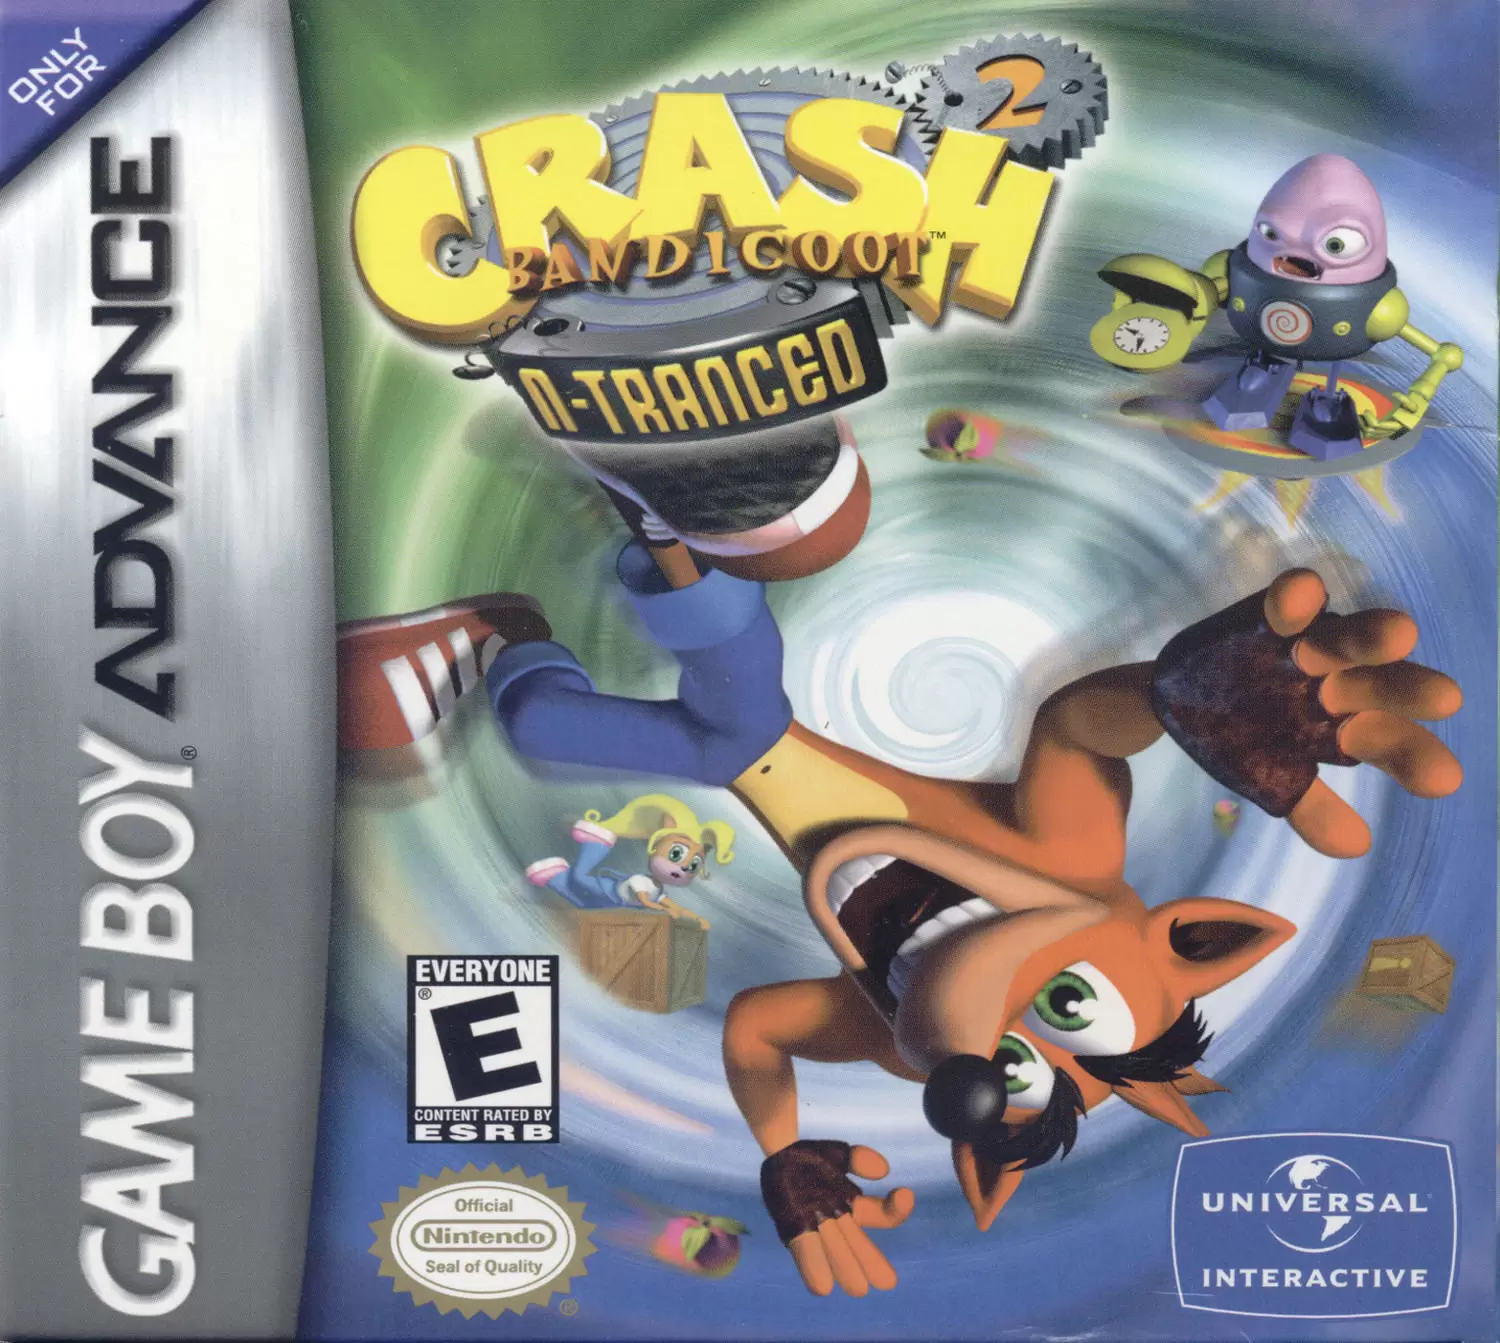 Game Boy Advance Games - Crash Bandicoot 2: N-Tranced